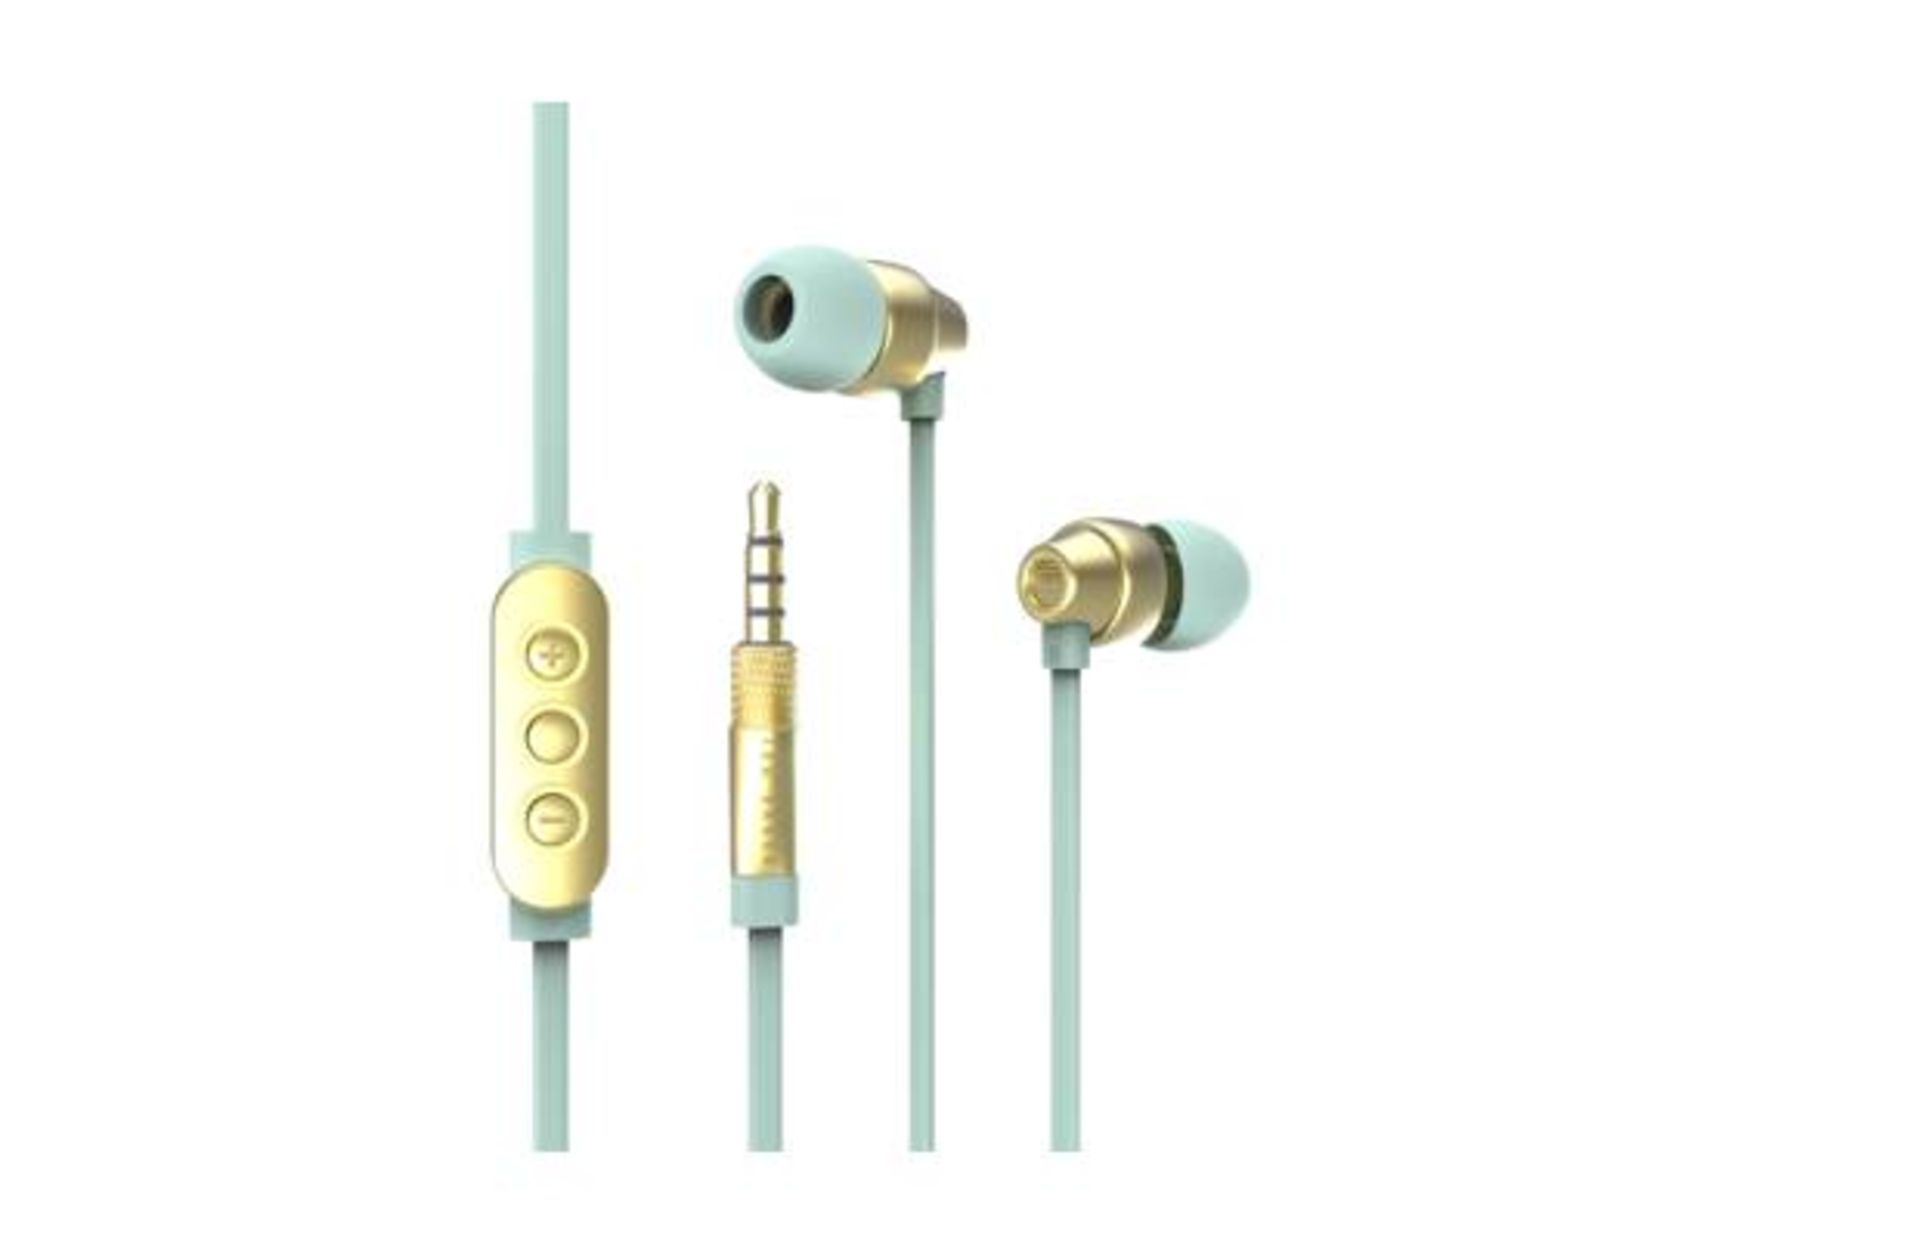 V Brand New Ted Baker Dover In-Ear Headphones In Mint/Gold RRP£59.95 eBay£39.99 X 2 YOUR BID PRICE